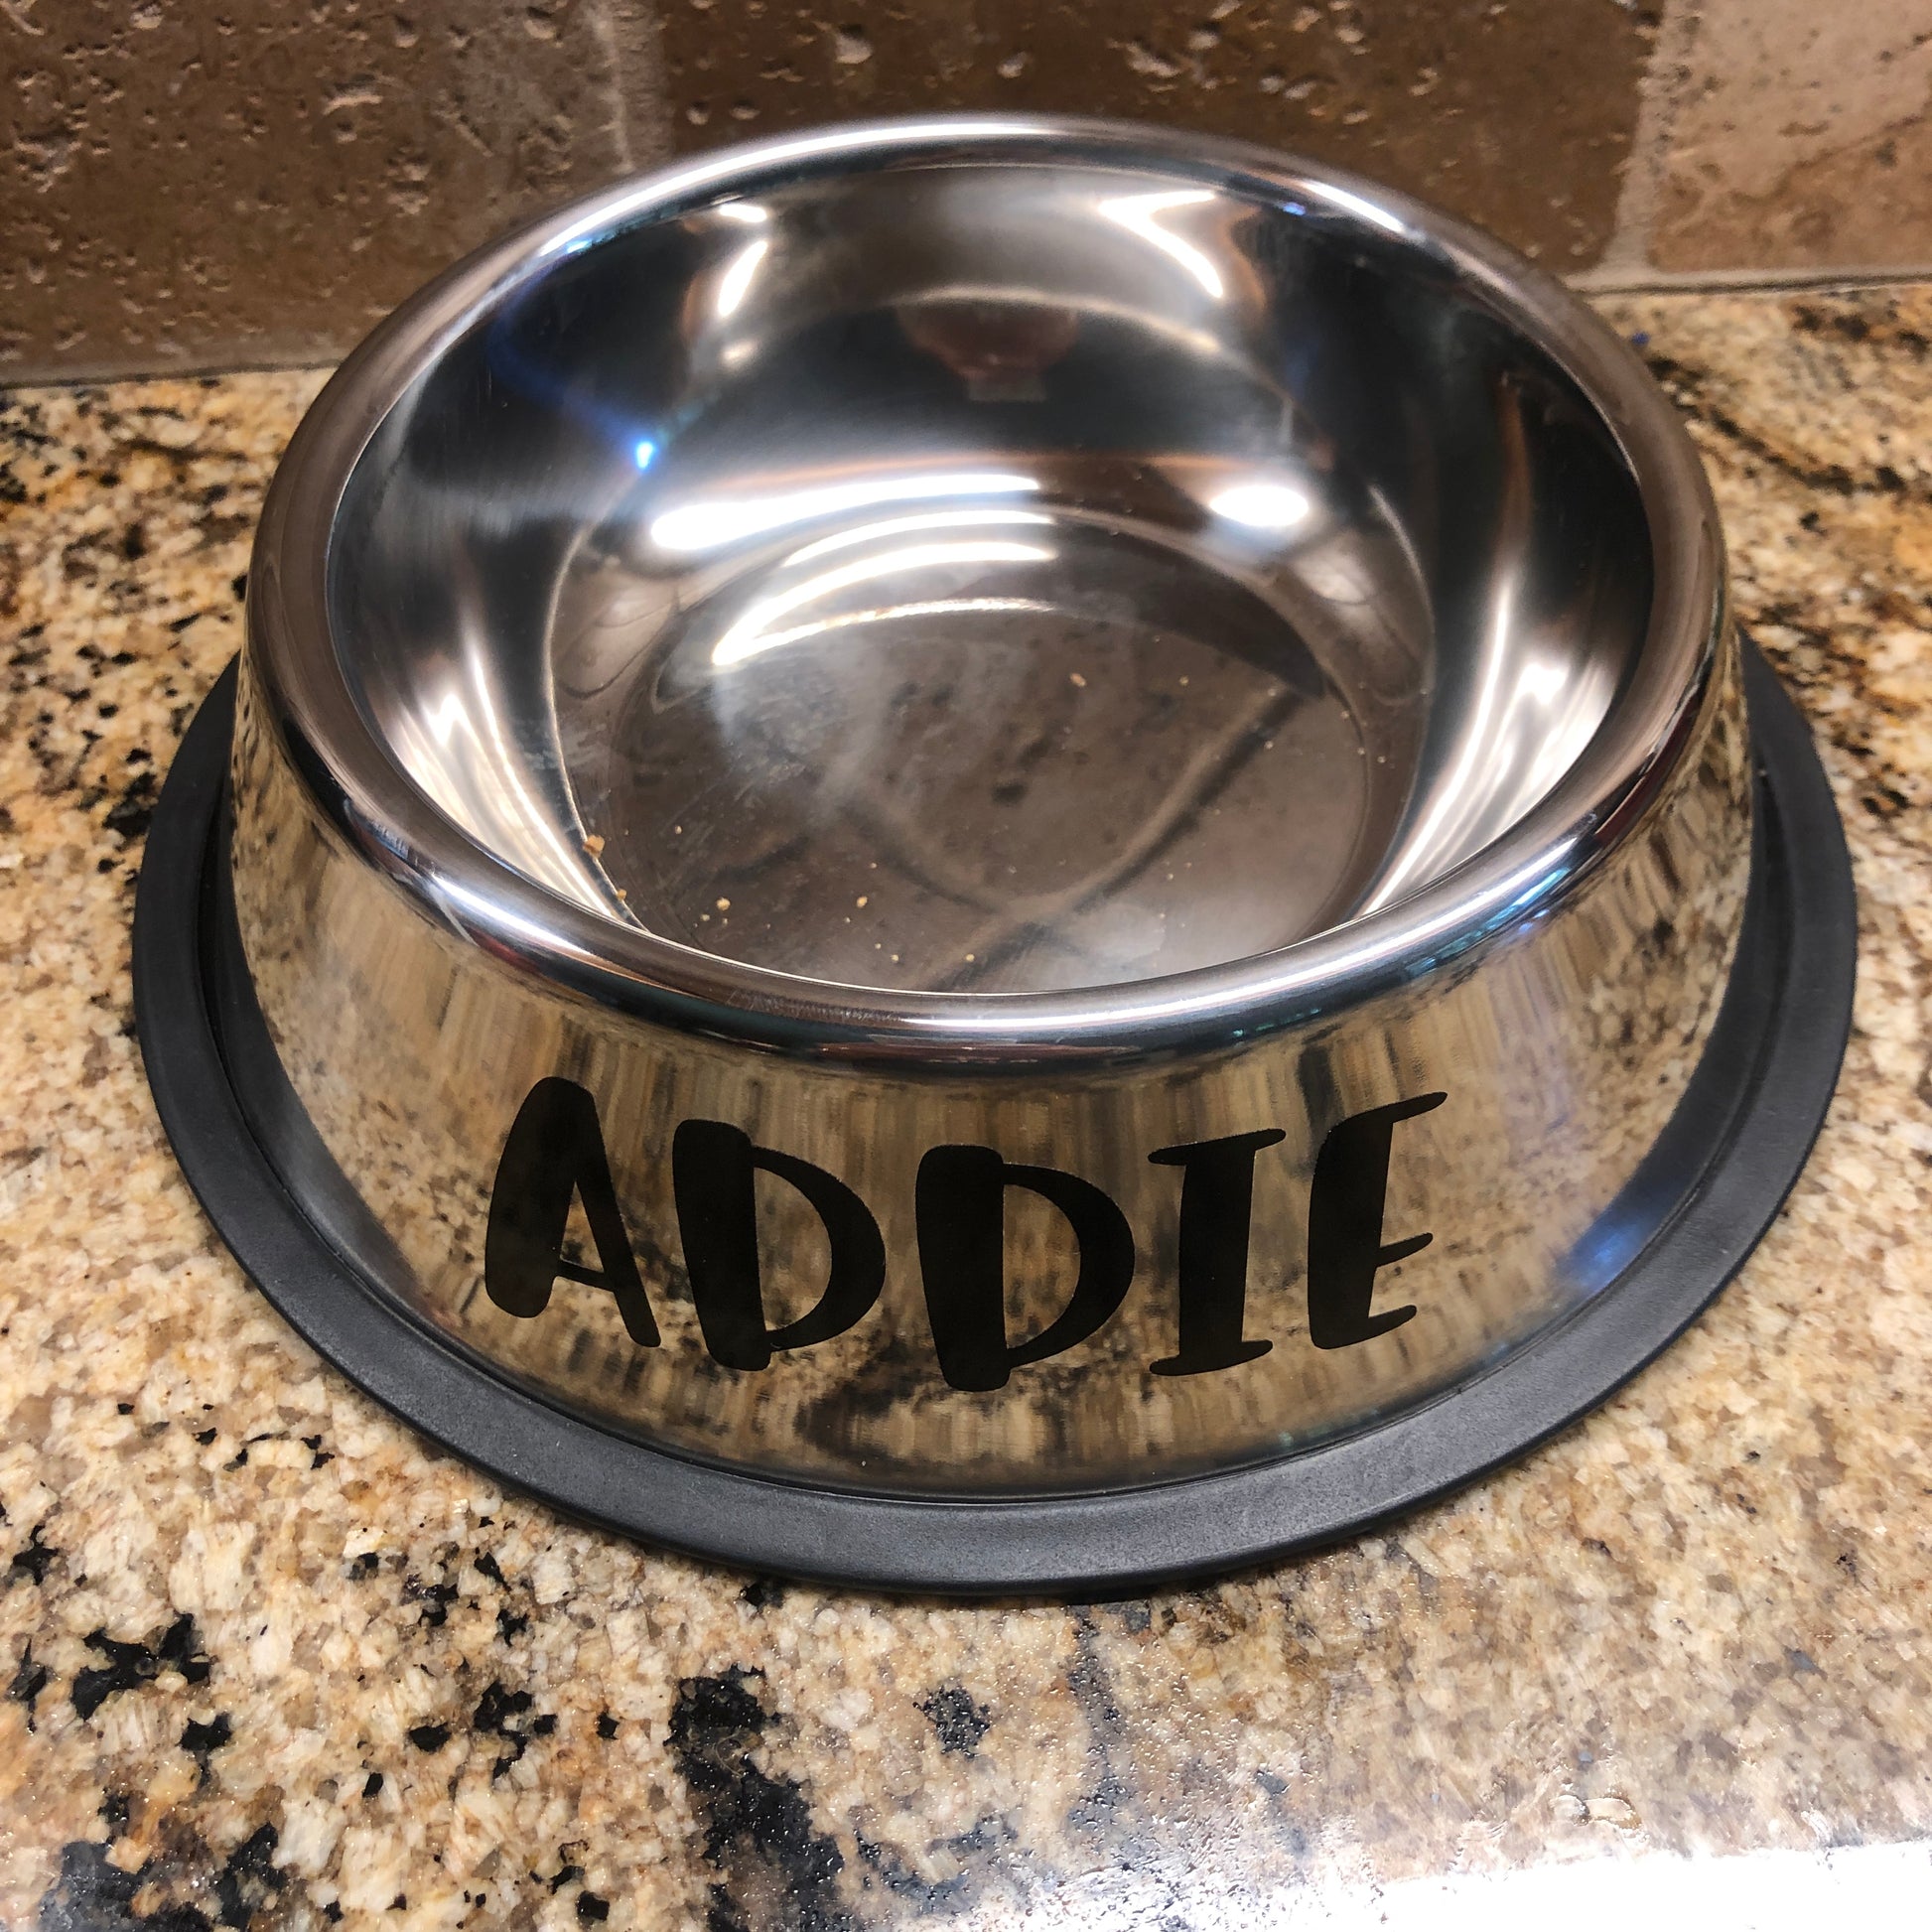 Personalized dog dish